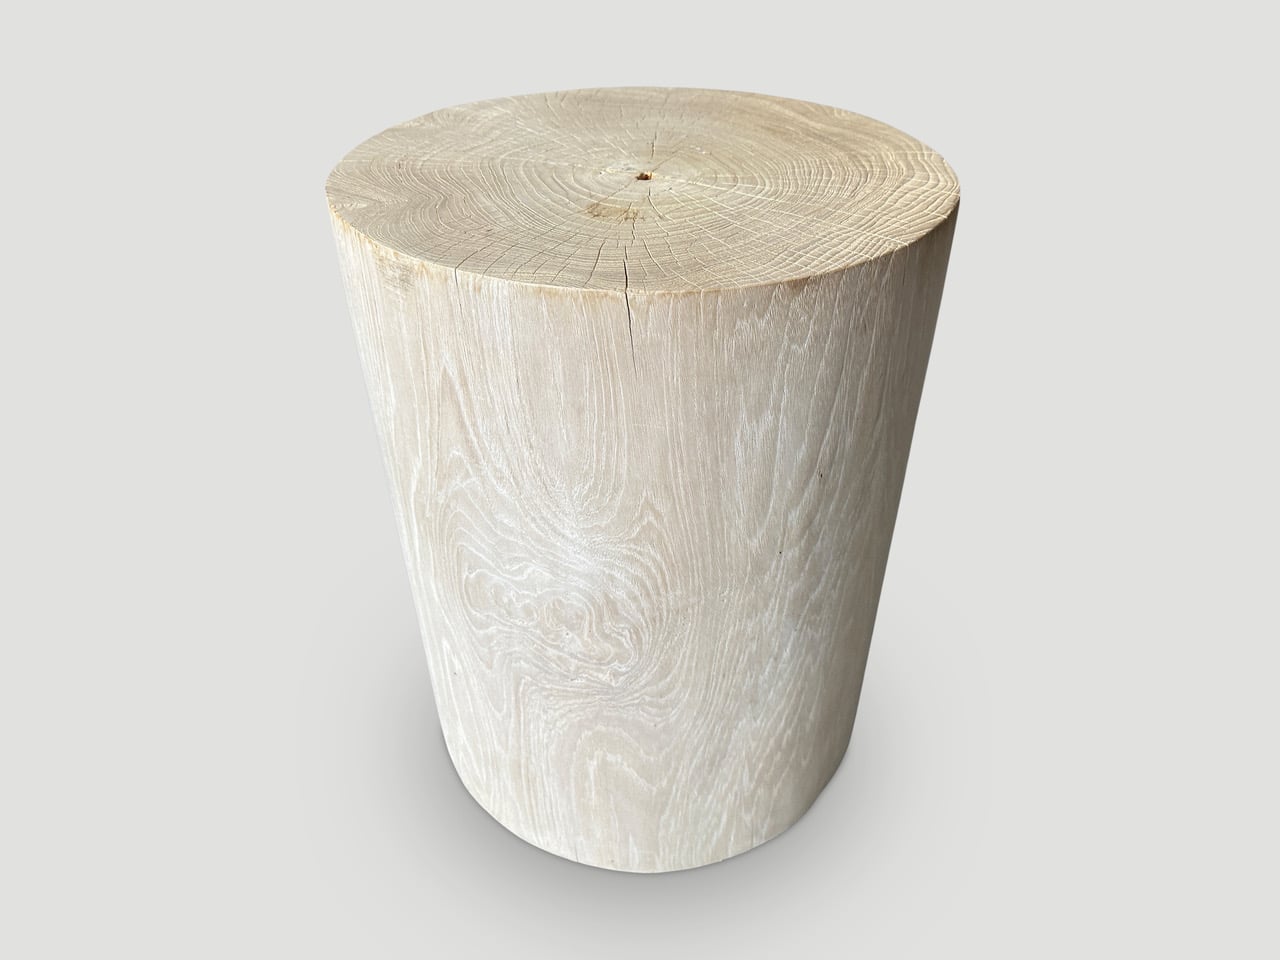 Reclaimed teak wood cylinder side table or stool